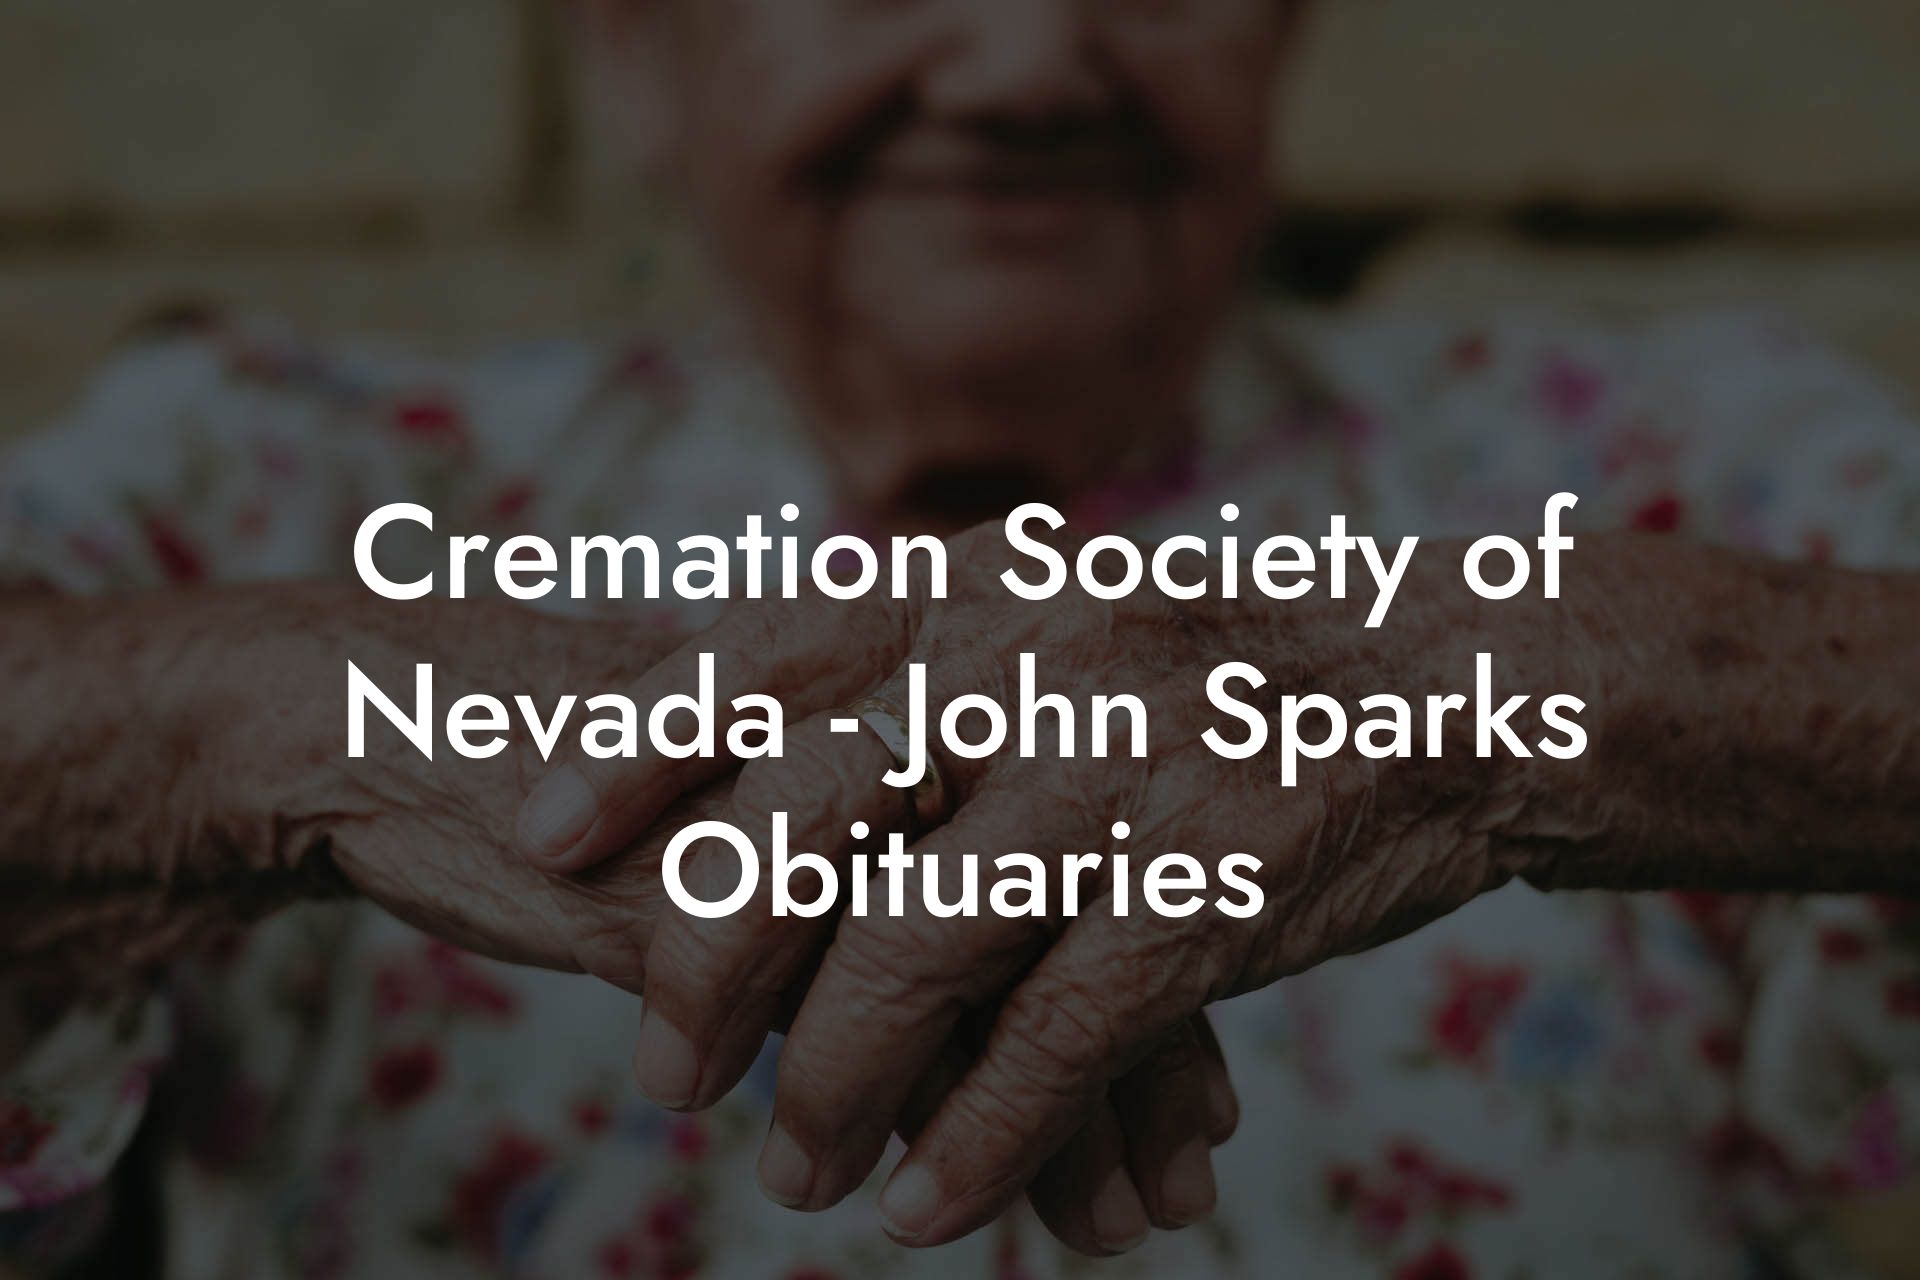 Cremation Society of Nevada - John Sparks Obituaries